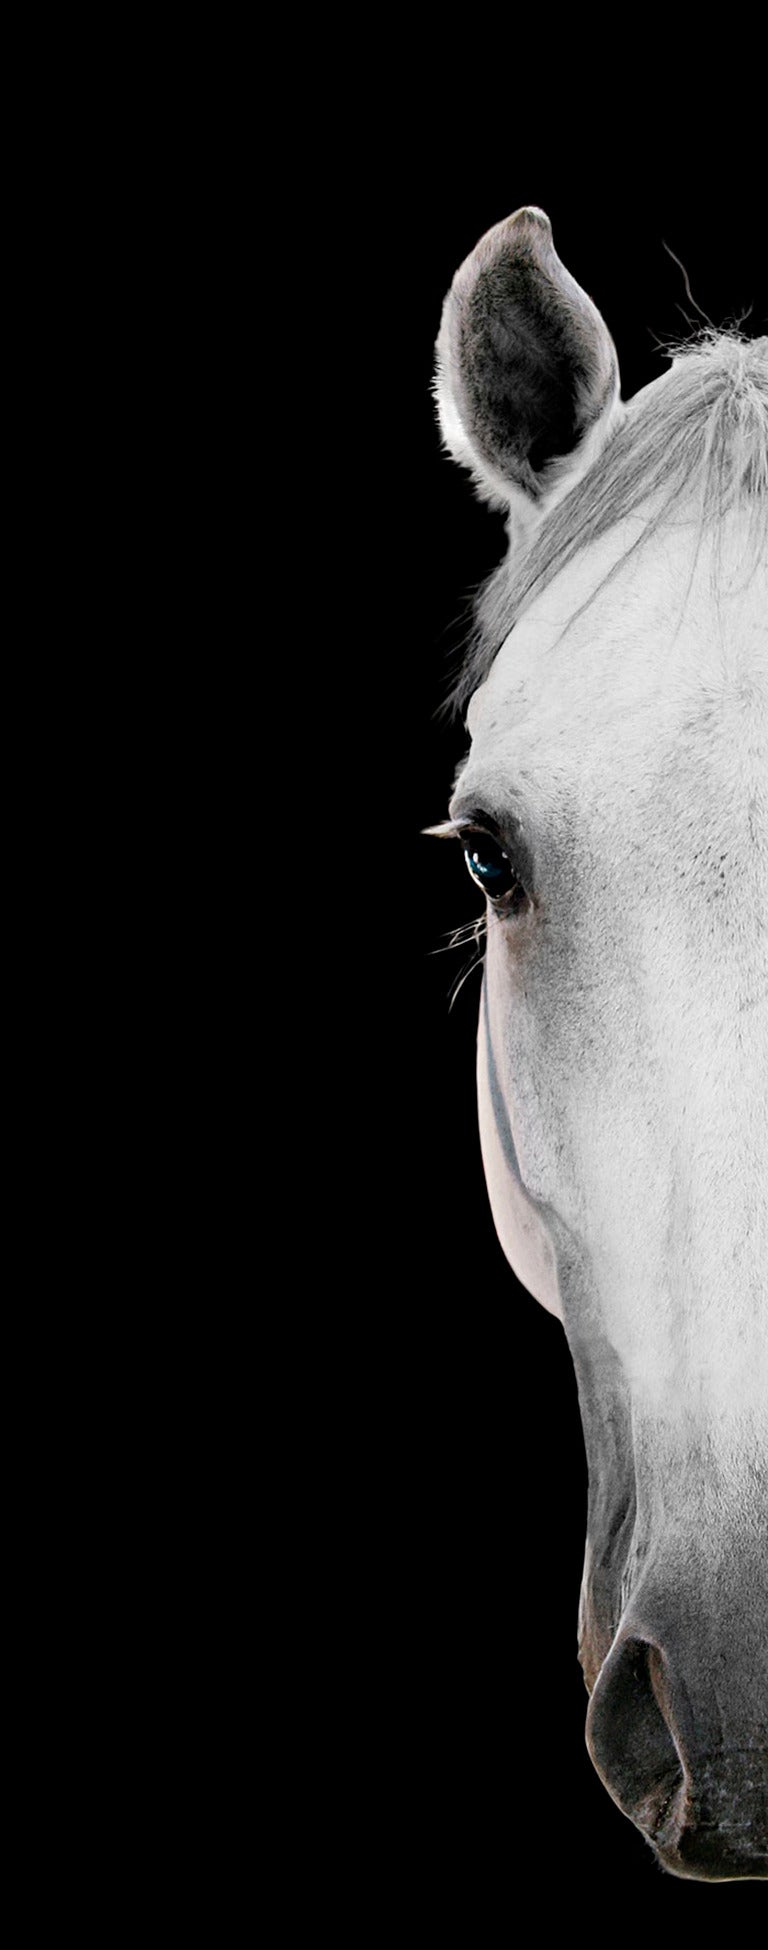 Bob Tabor Portrait Photograph - Horse Portrait 34 - black and white photography